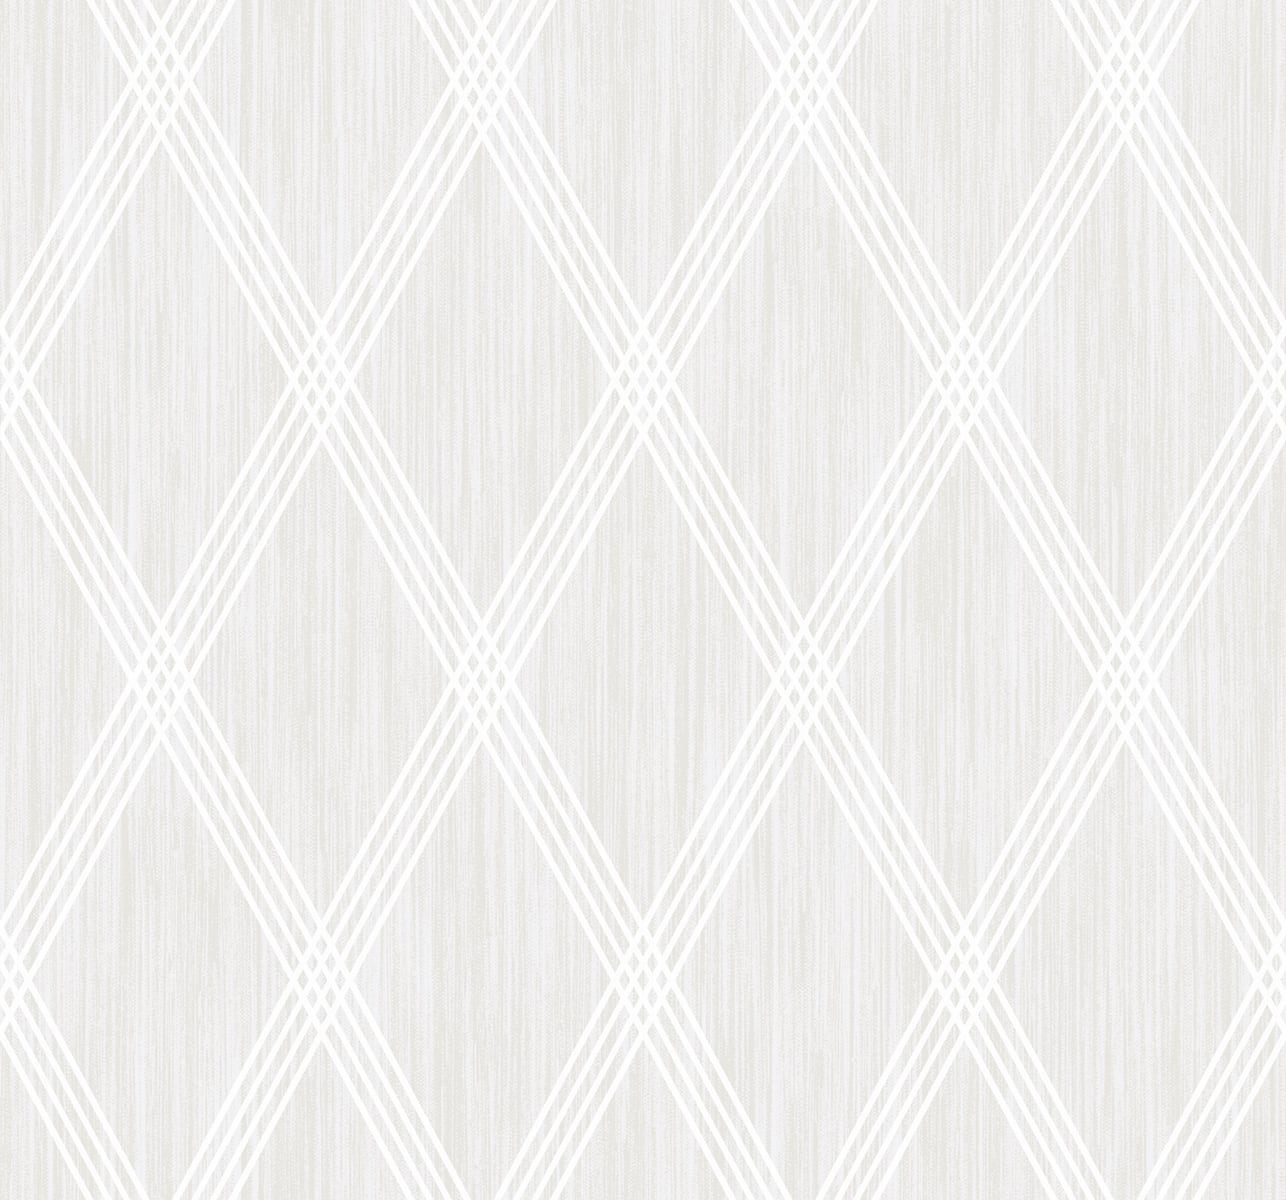 Seabrook Designs AW70900 Casa Blanca 2 Marble Diamond Geometric  Wallpaper Metallic Pearl and Silver Glitter